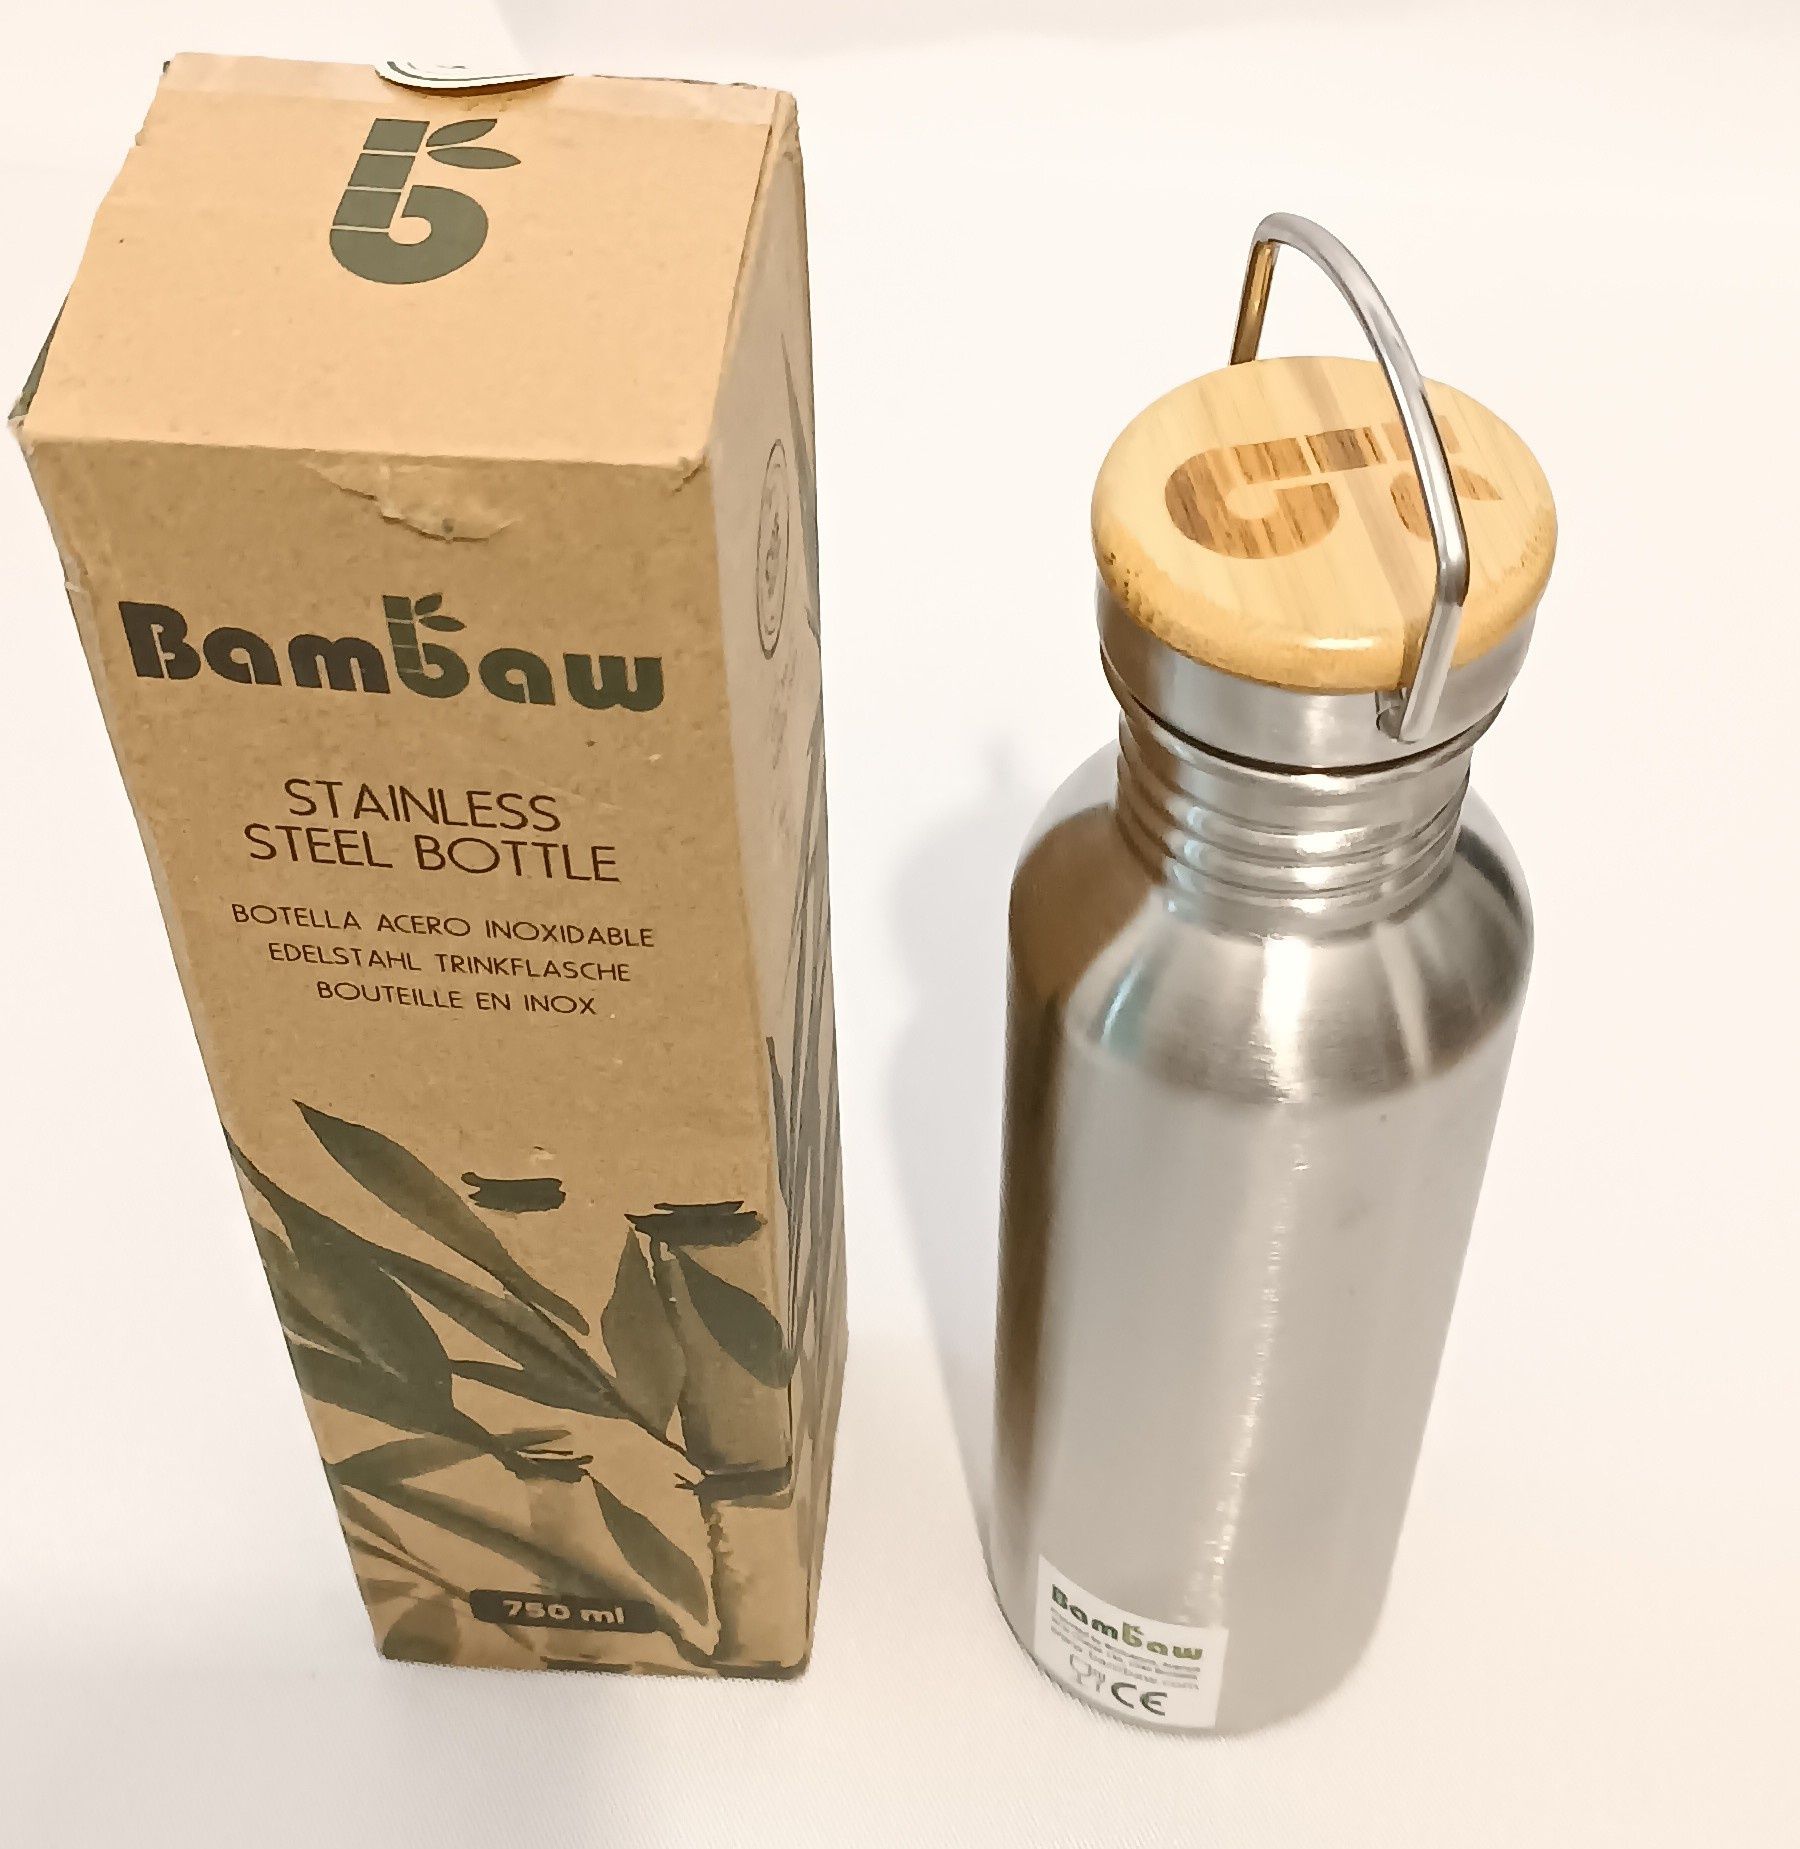 BAMBAW butelka metalowa STAL NIERDZEWNA 750ml